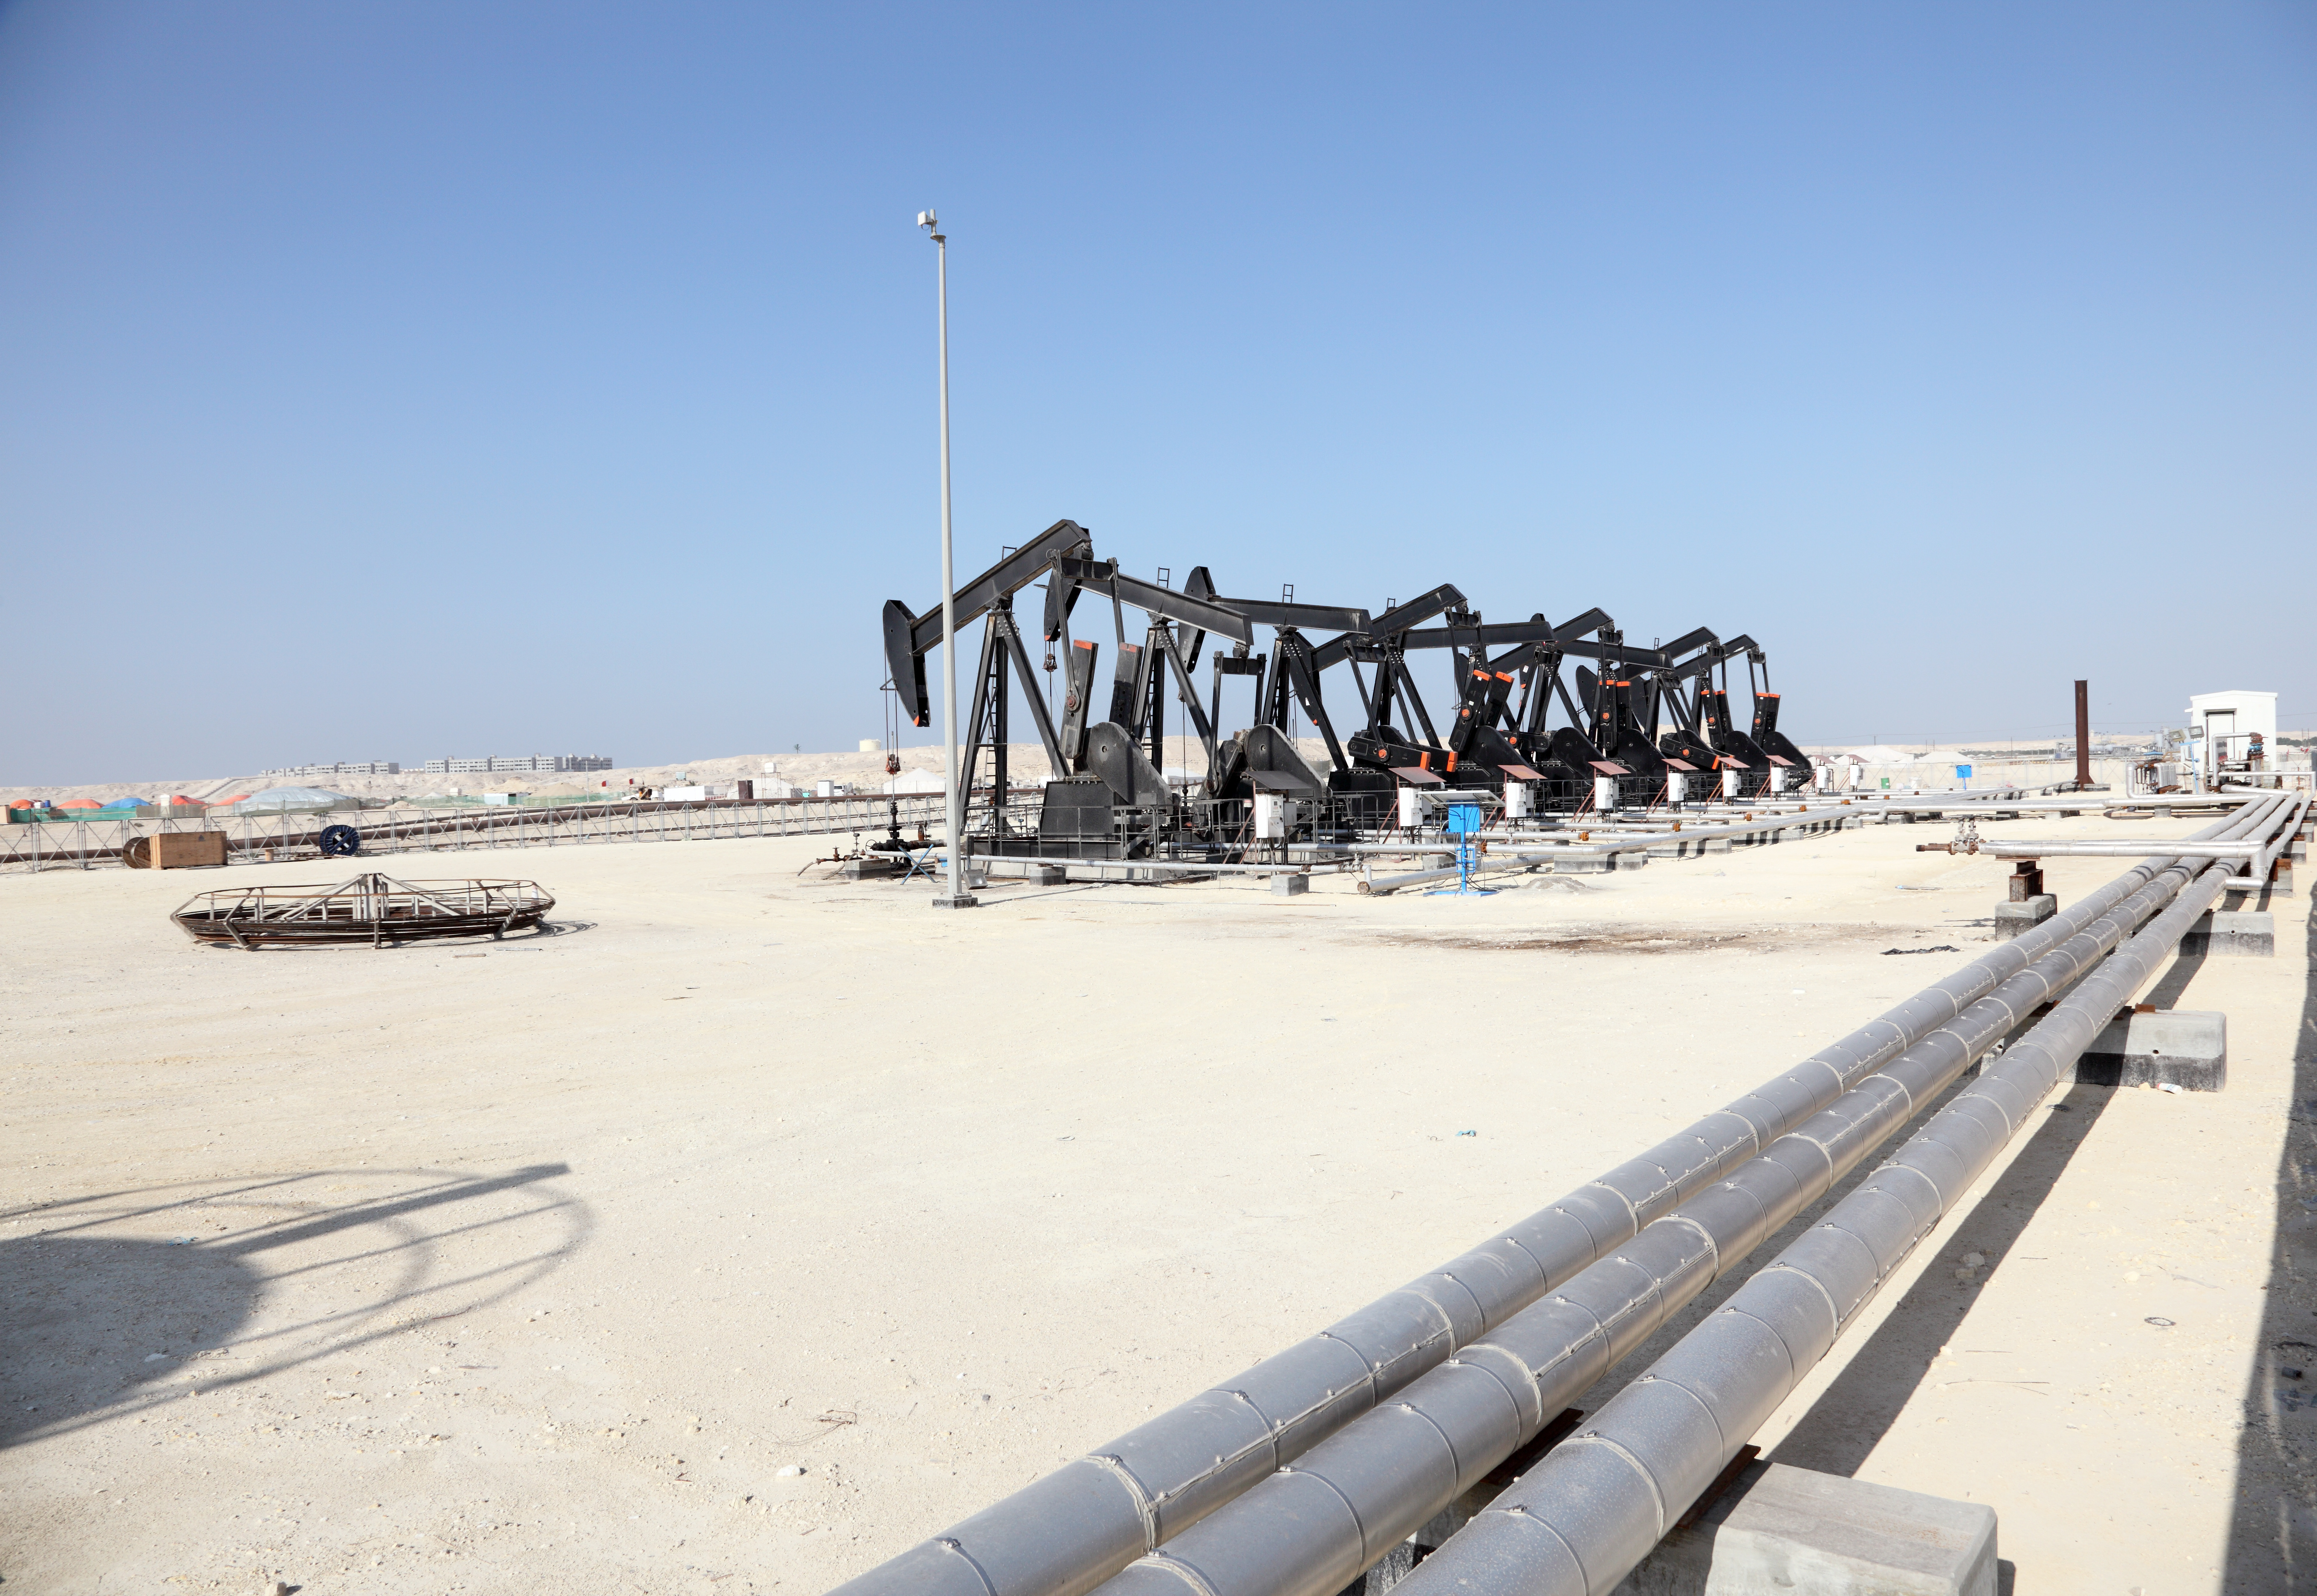 Oil pump jacks in the desert of Bahrain, Middle East. Photo courtesy of Adobe Stock.